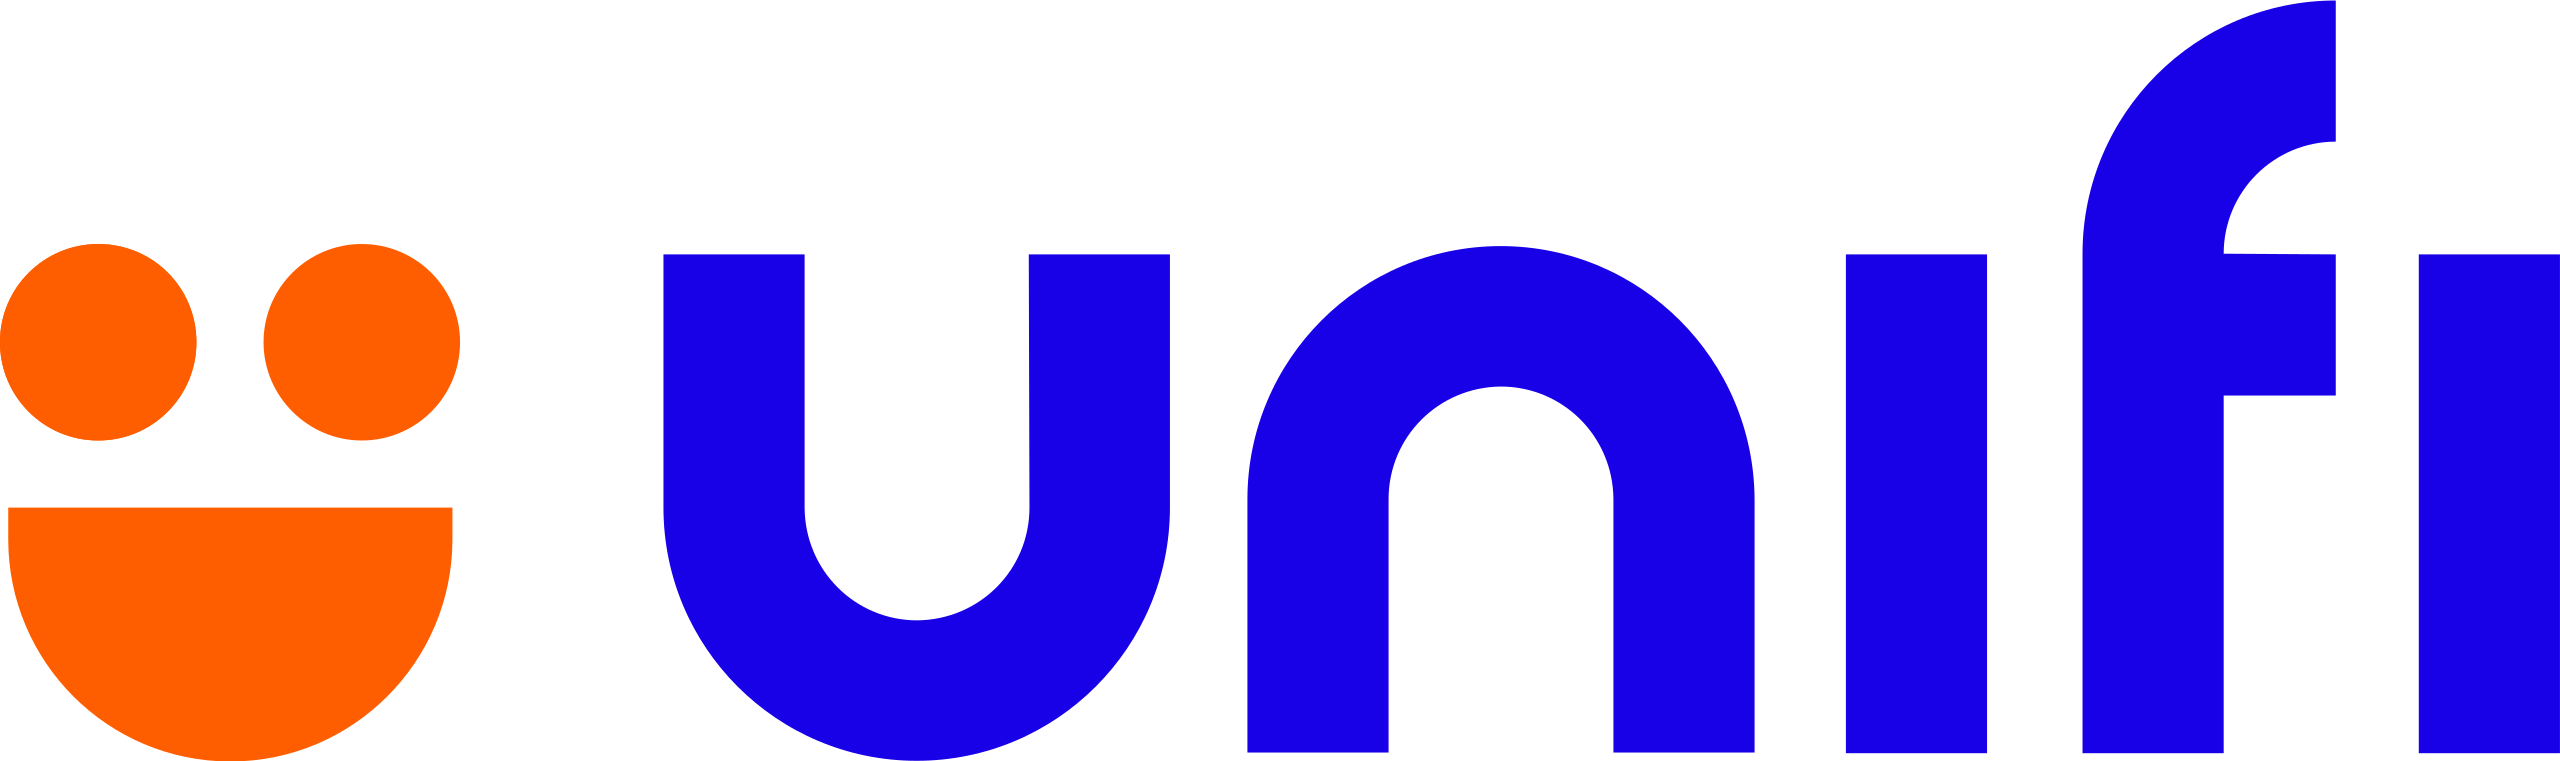 Unifi logo.svg